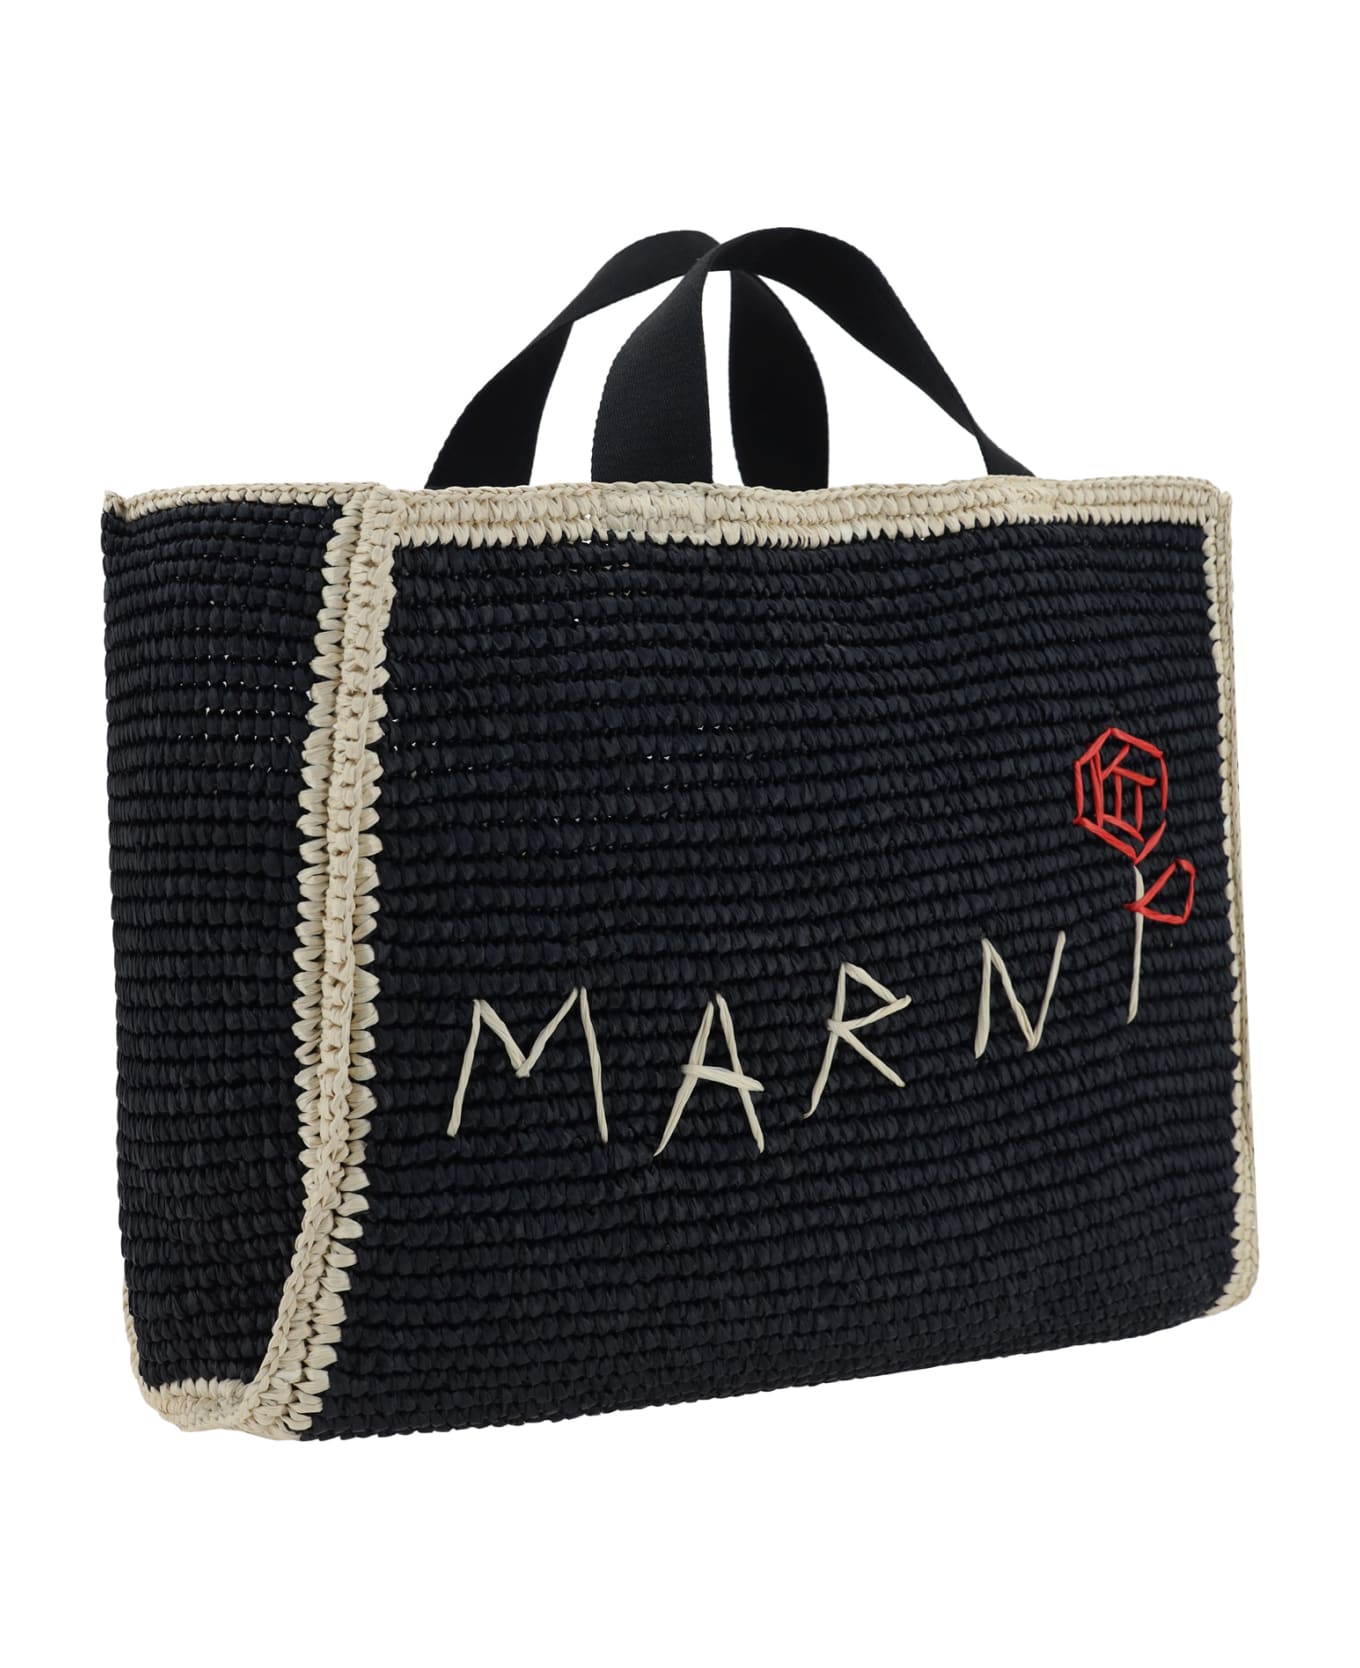 Marni Tote Sillo Medium Handbag - Black/ivory/black